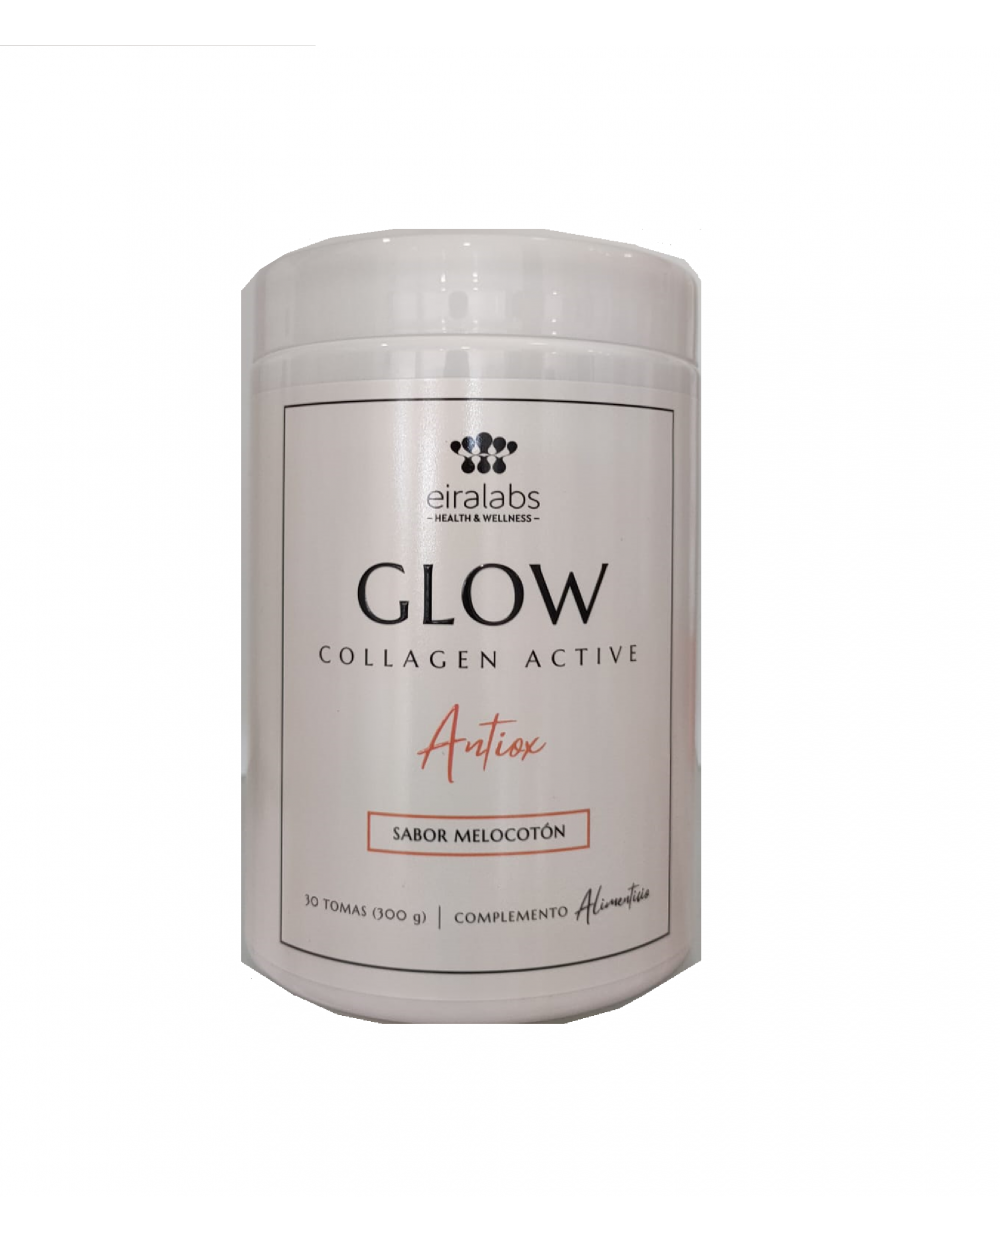 Glow collagen active antiox eiralabs 300 g (melocotón)